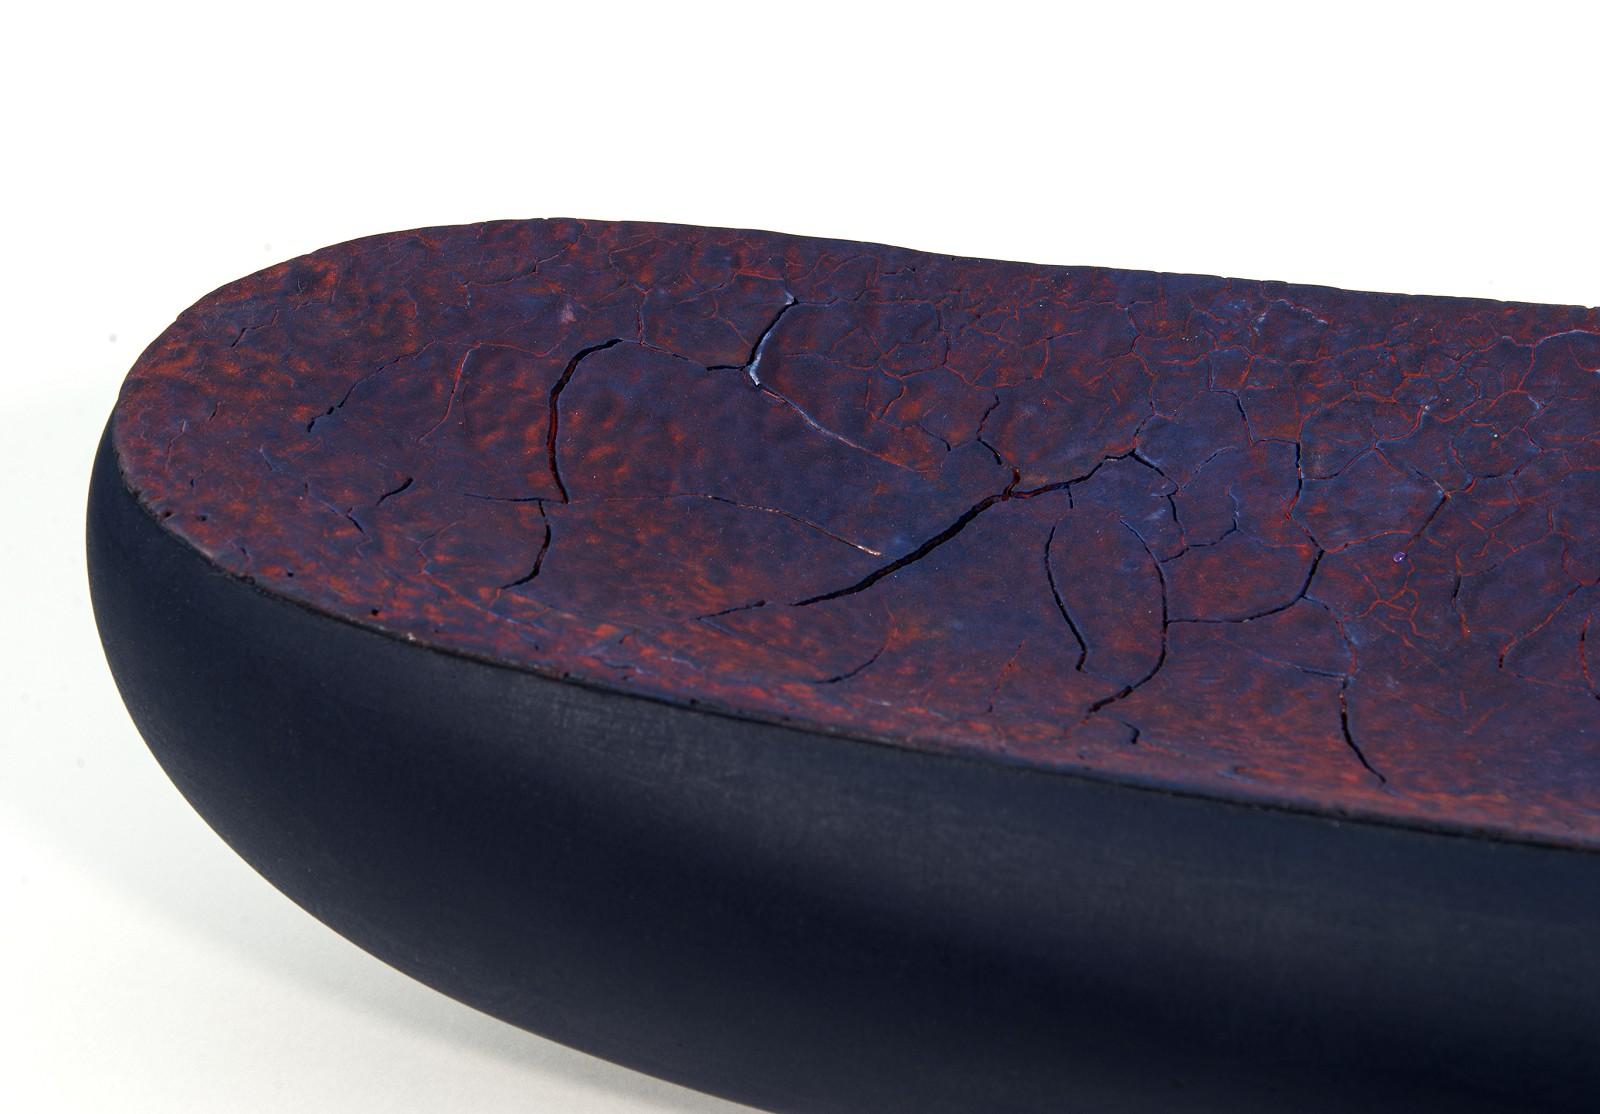 Ellesmere - black, purple, orange, textured, ceramic tabletop vessel - Black Abstract Sculpture by Steven Heinemann